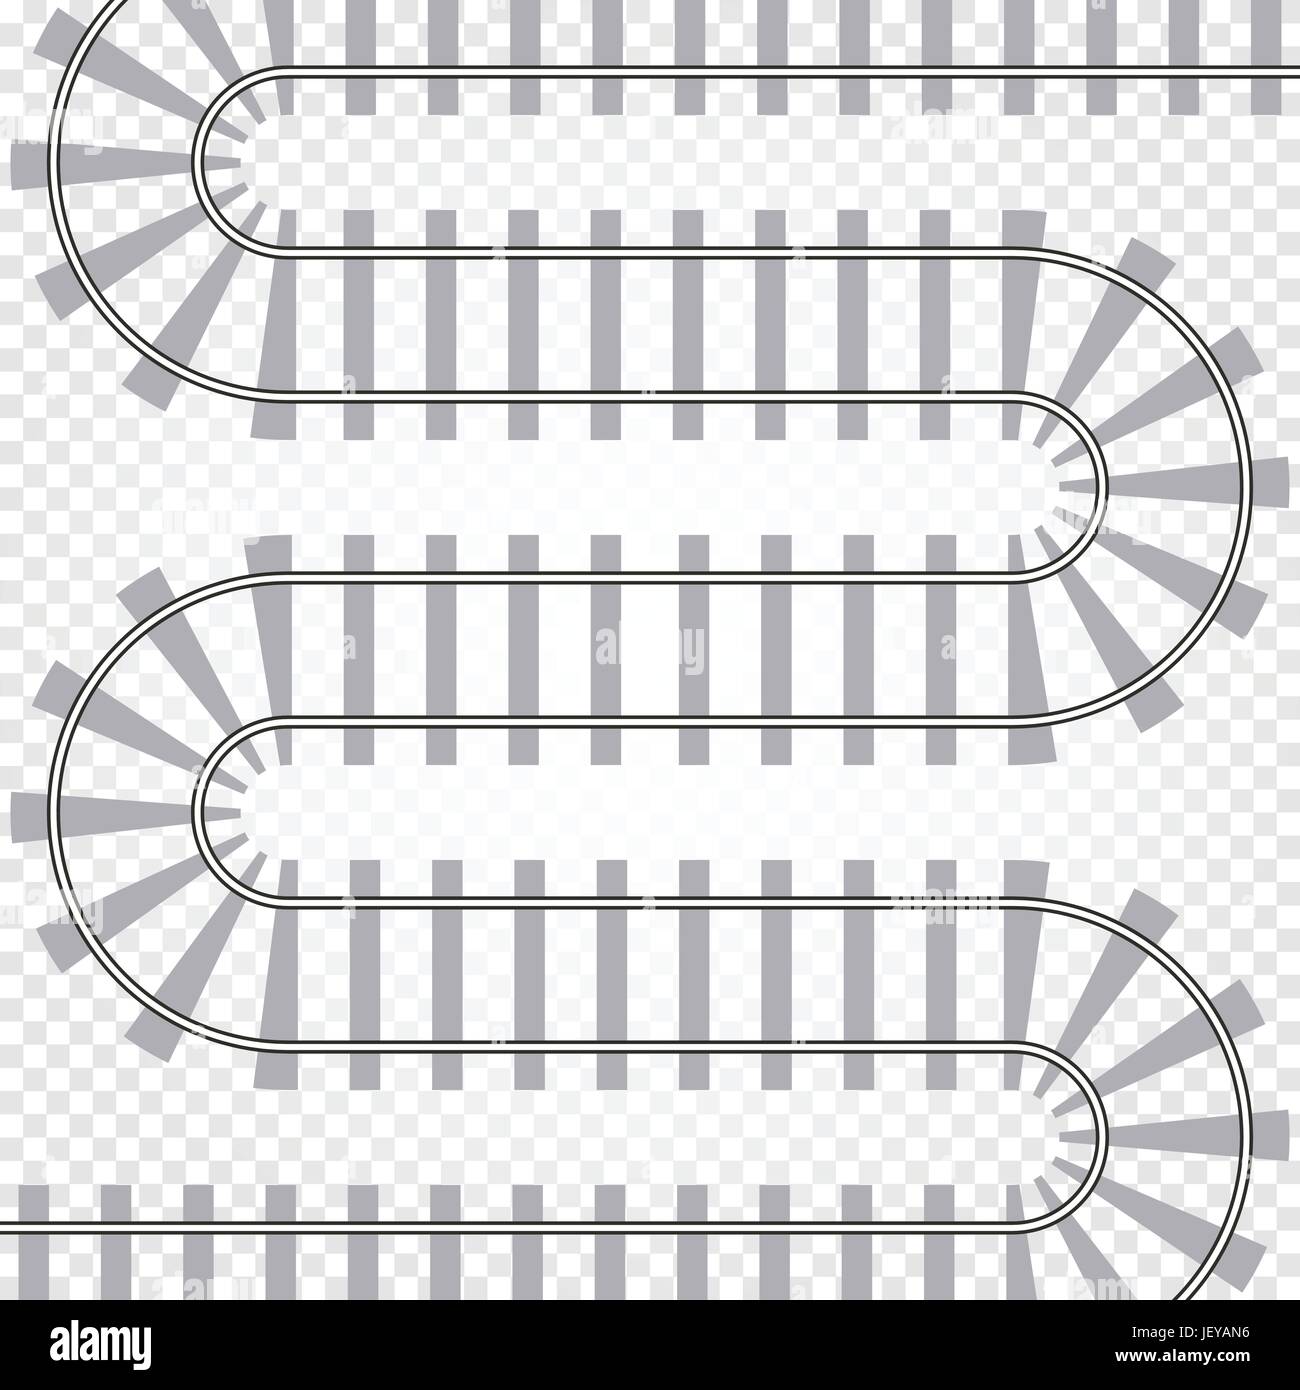 Rail railroad track vector illustration. Railway train isolated. Winding path road Stock Vector